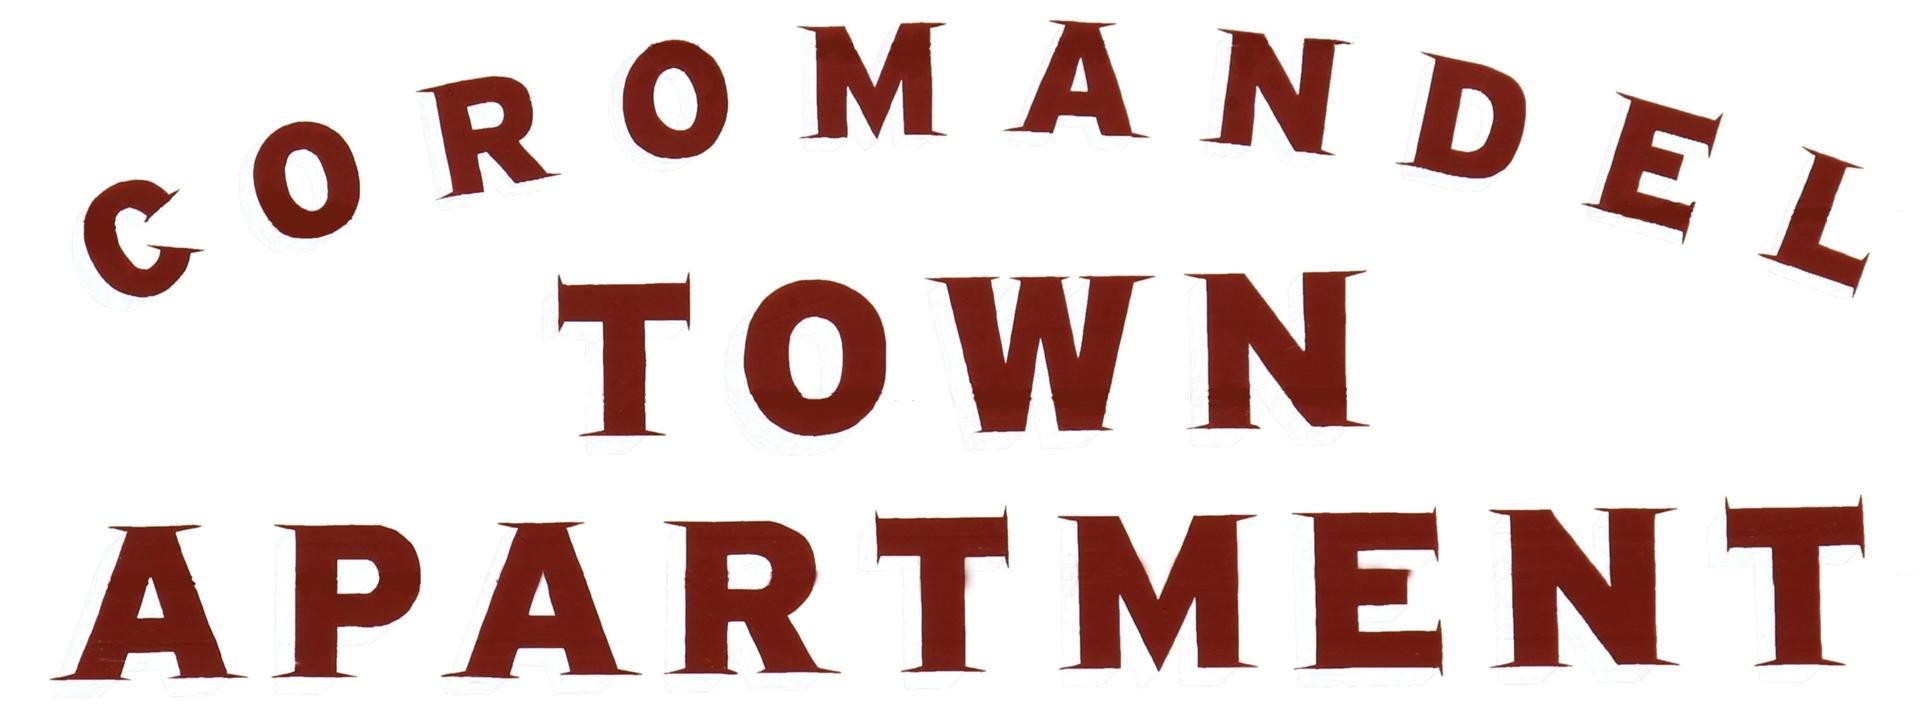 Logo: Coromandel Town Apartment